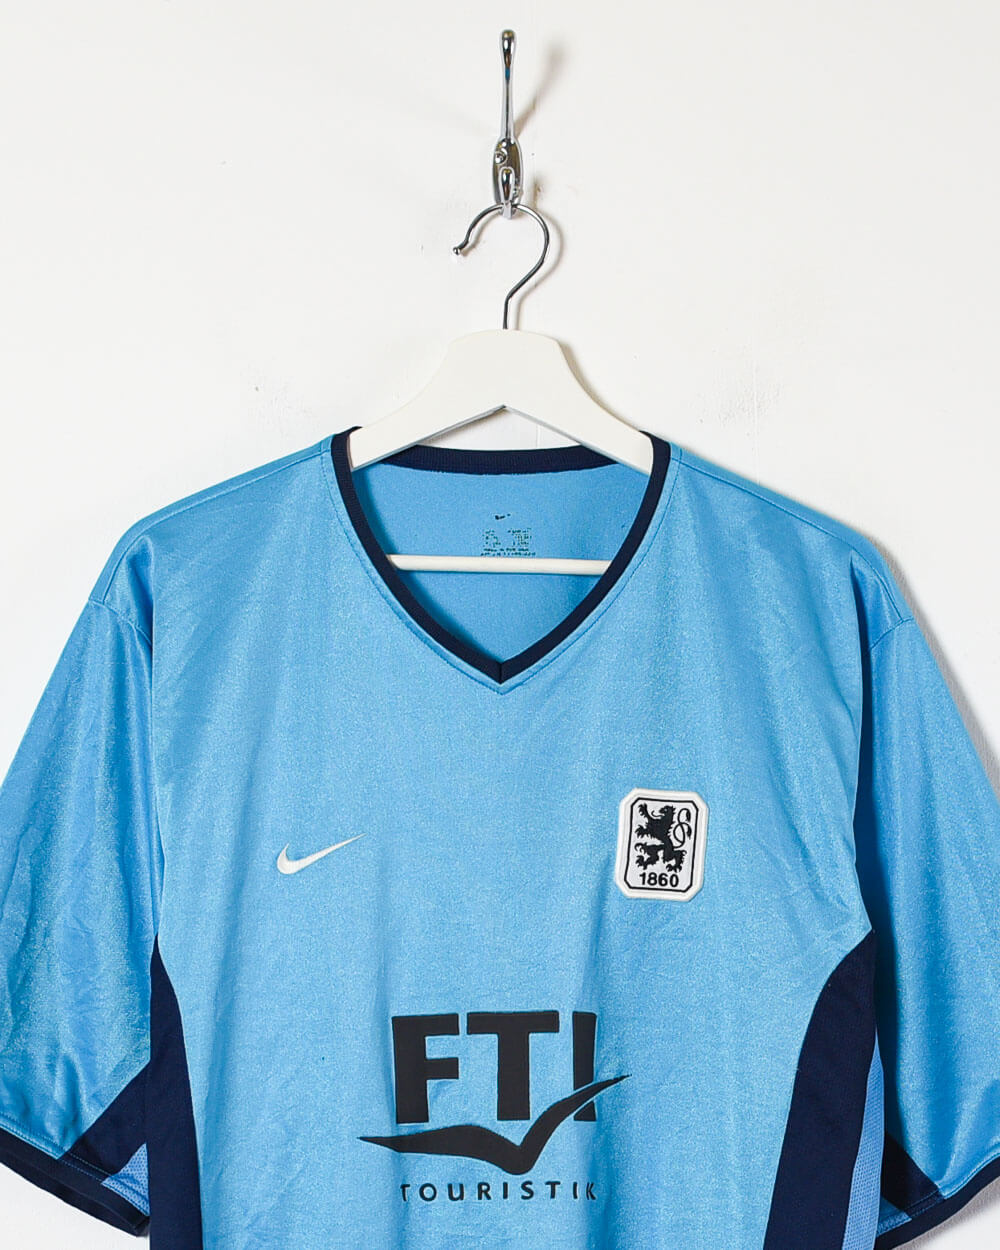 Blue Nike 1860 Munich 2001/02 Home Football Shirt - X-Large